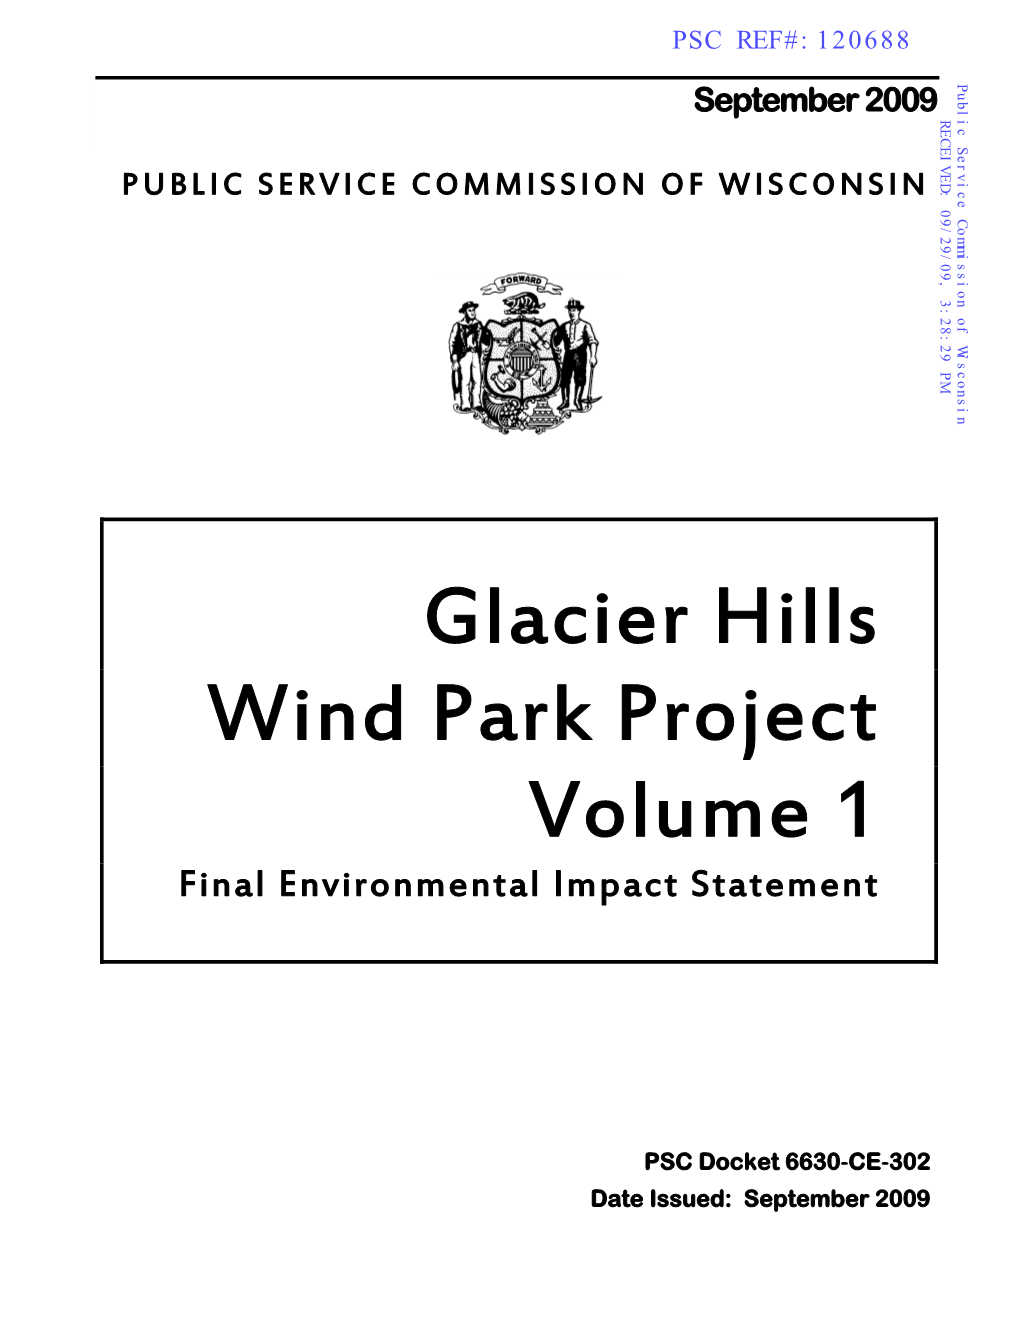 Glacier Hills Wind Park Project Volume 1 Final Environmental Impact Statement